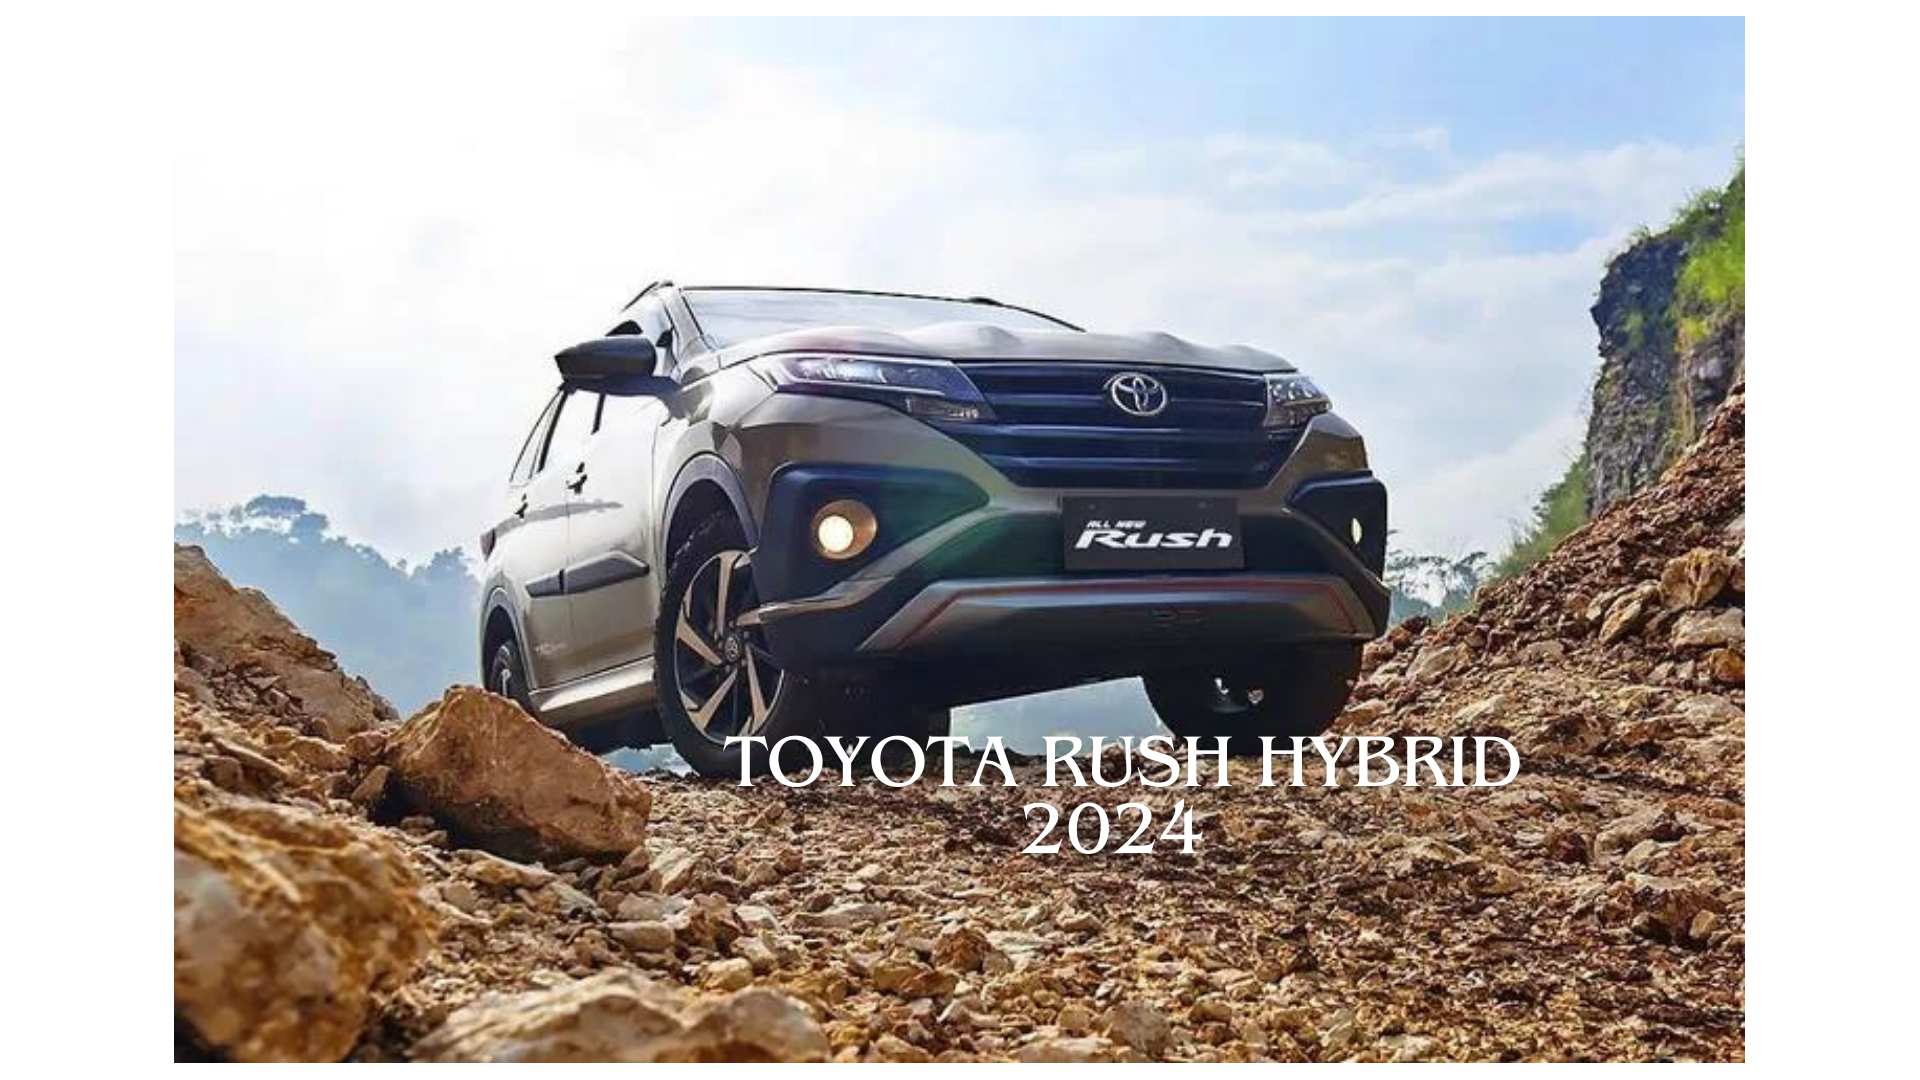 Toyota Rush Hybrid 2024, SUV Terbaru yang Punya Performa Mesin Hybrid Gila-Gilaan